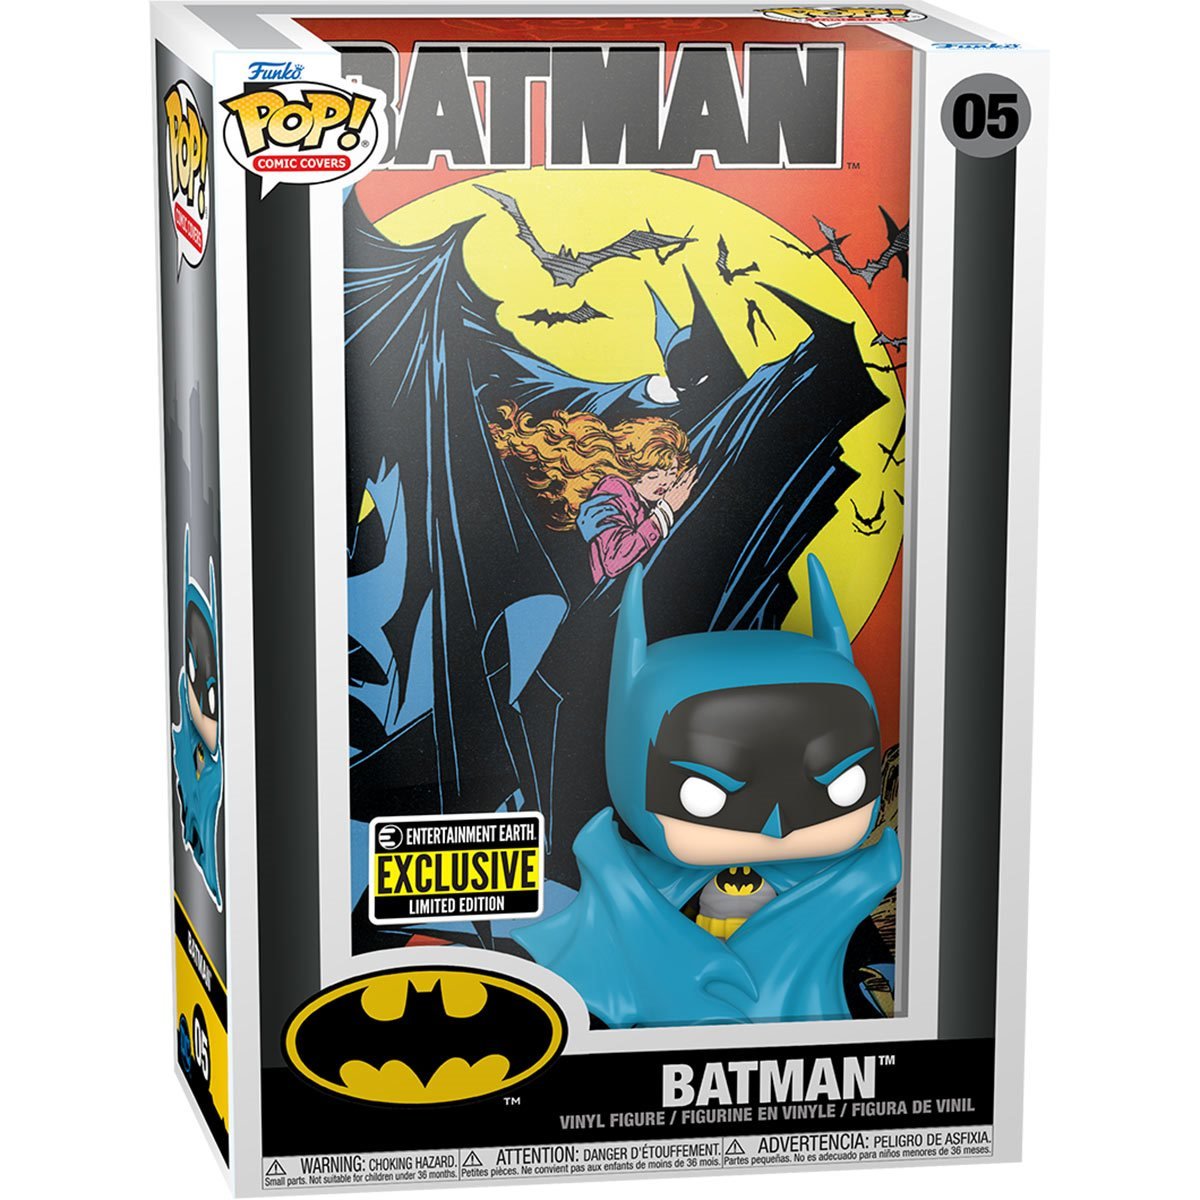 POP! Heroes McFarlane Comic Cover Batman #05